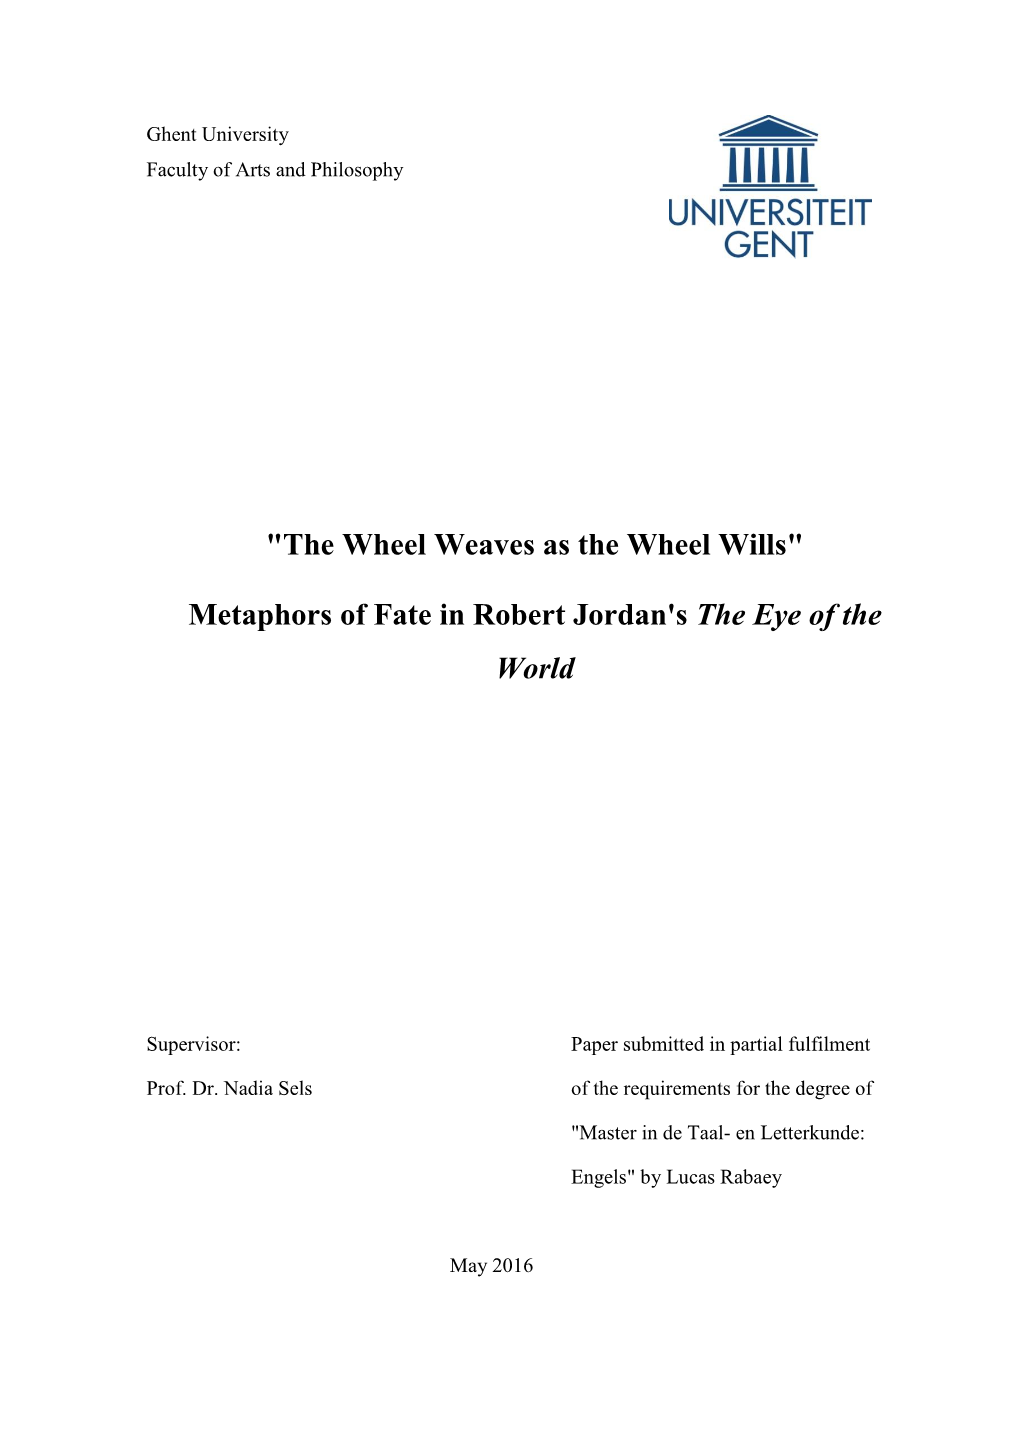 "The Wheel Weaves As the Wheel Wills" Metaphors of Fate in Robert